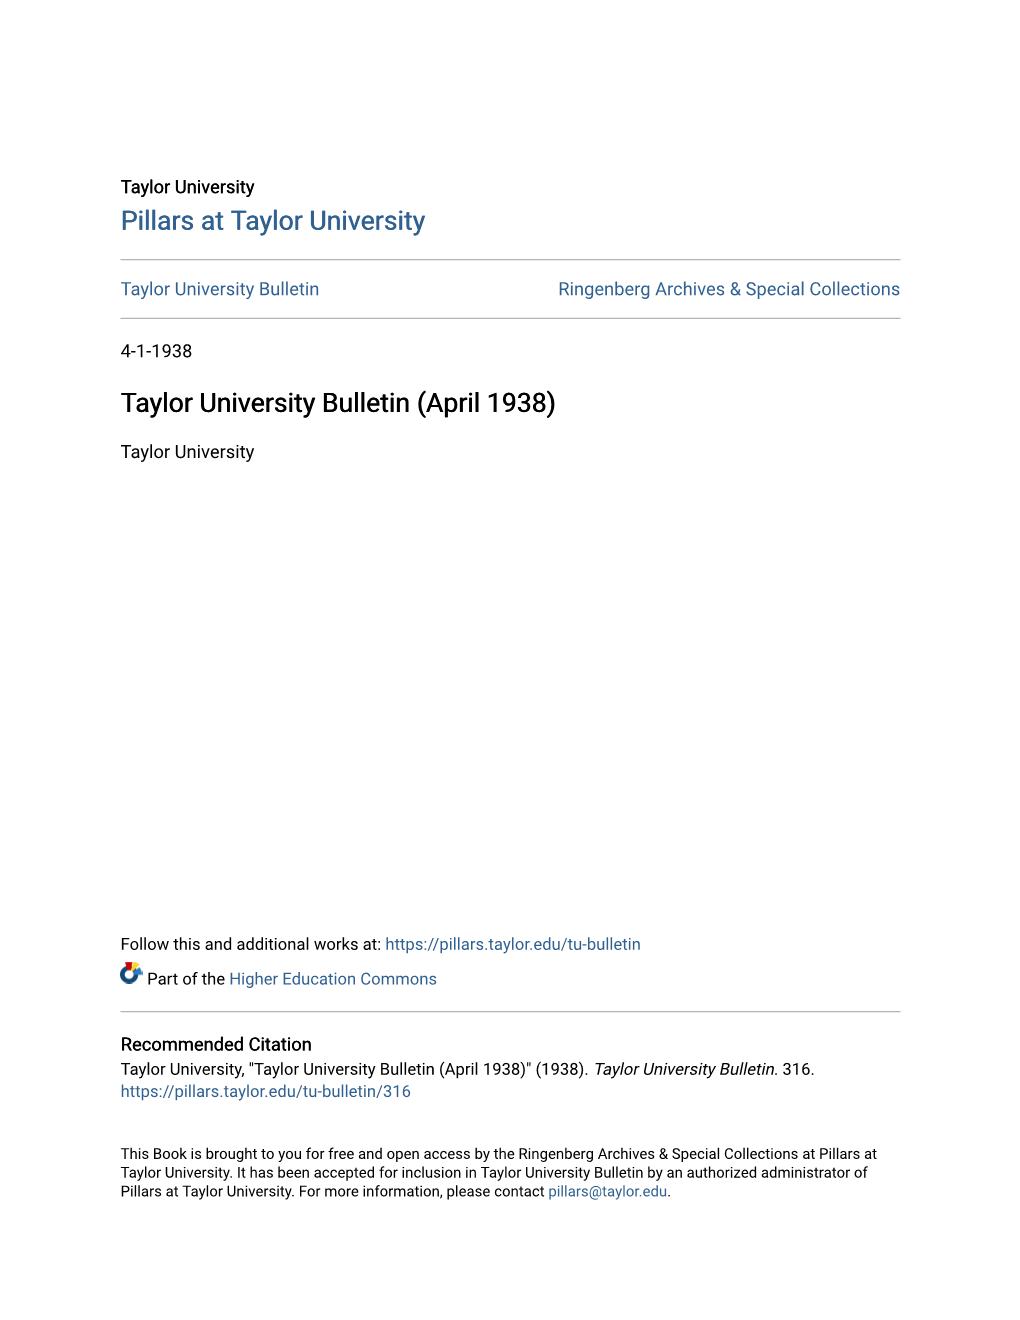 Taylor University Bulletin (April 1938)